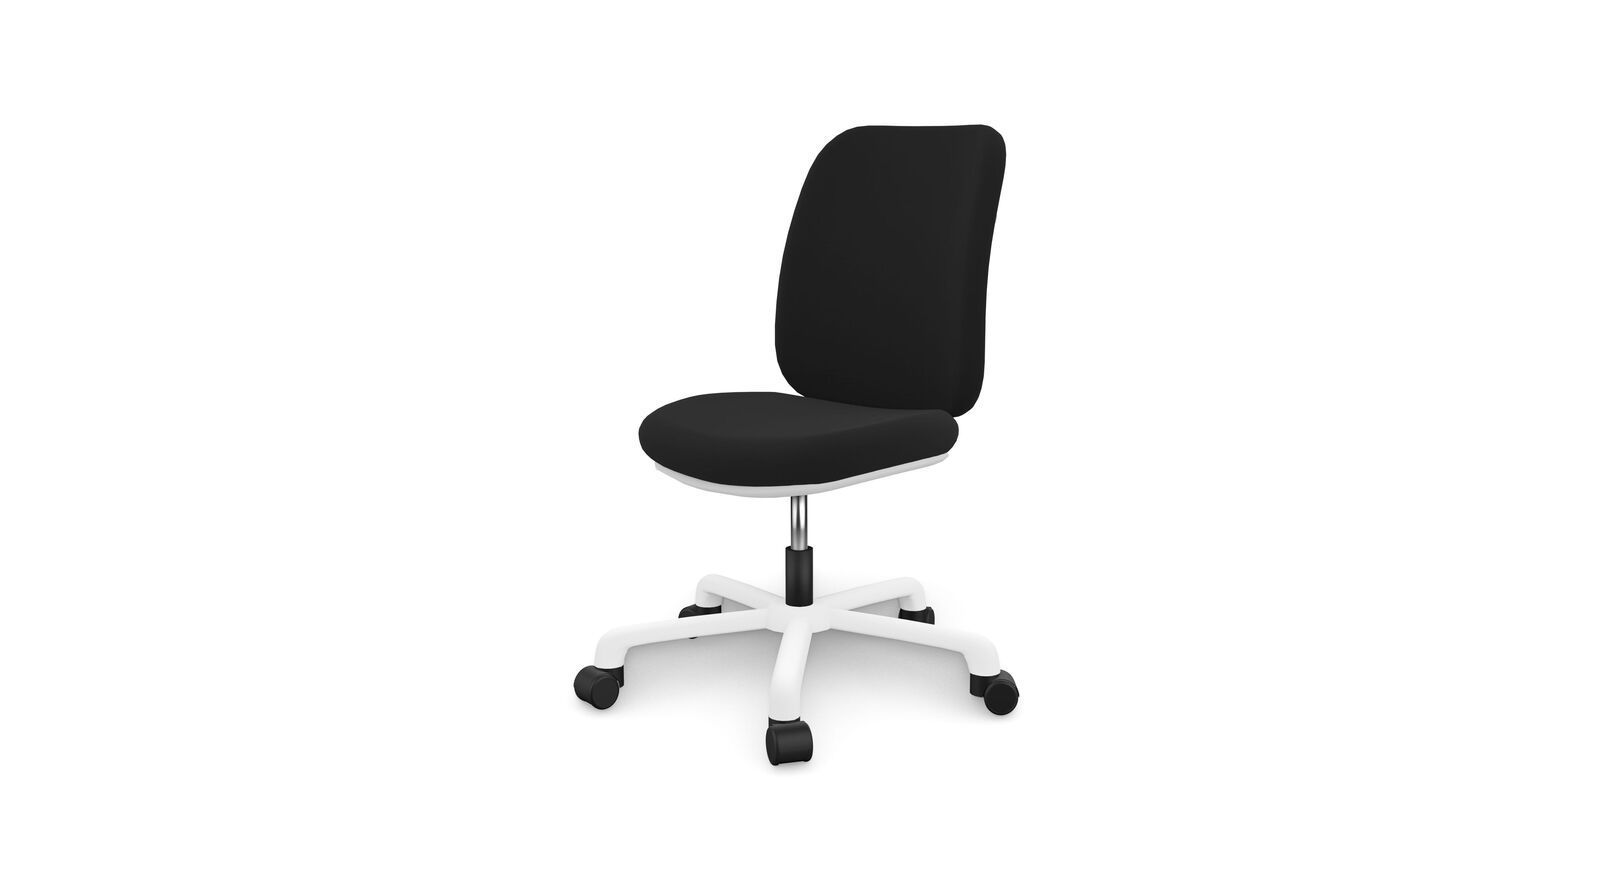 LIFETIME Bürostuhl Comfort mit kindgerechtem Design in Schwarz-Weiß